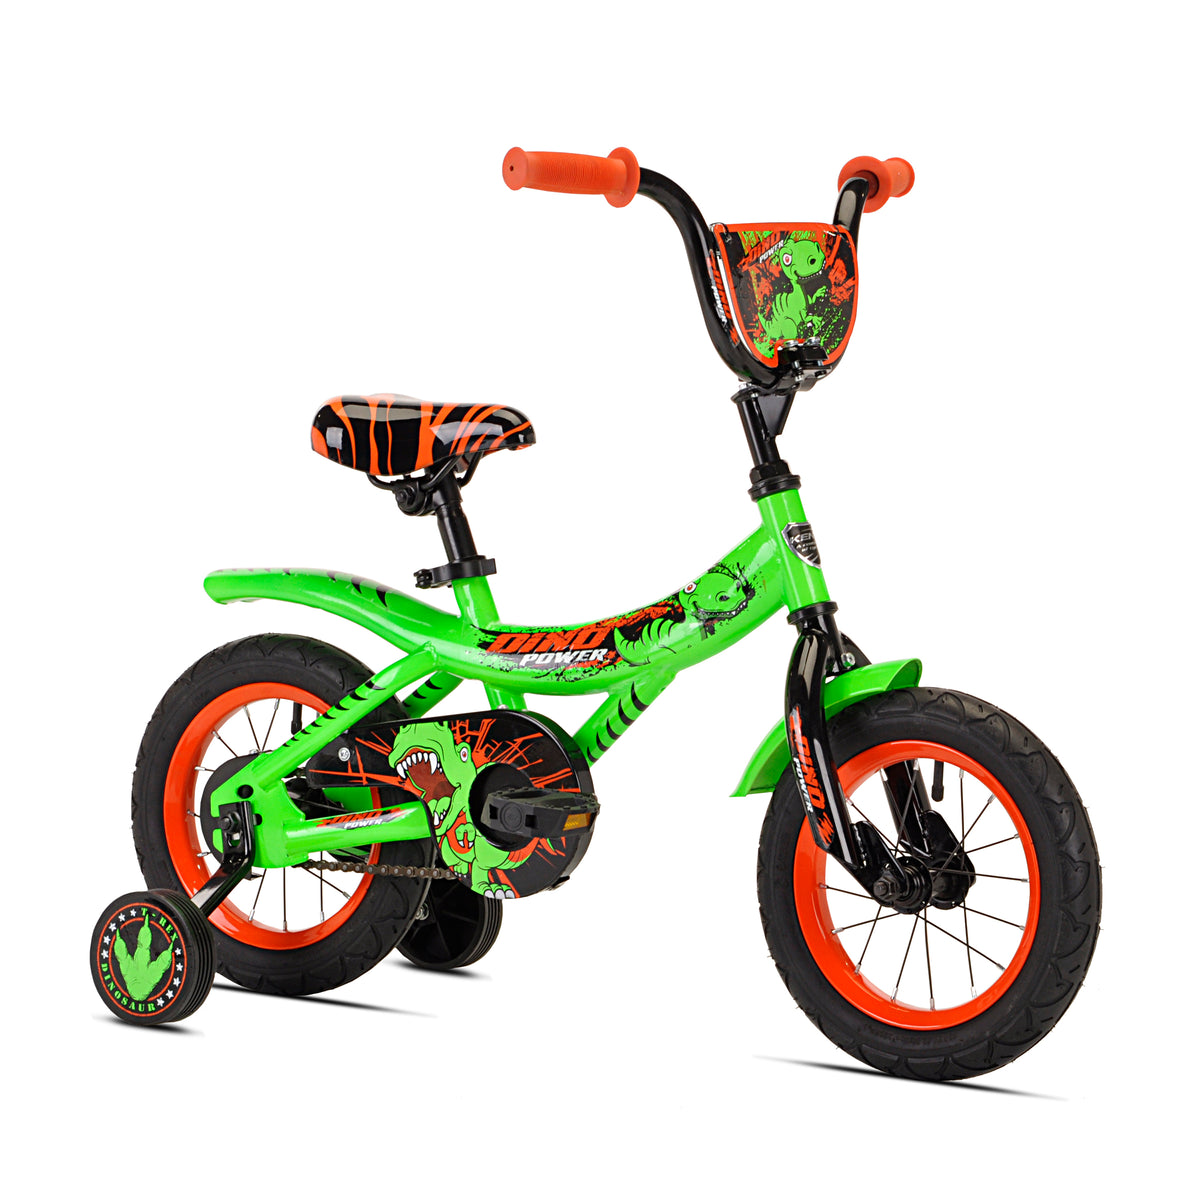 12" Kent Dino Power | BMX Bike for Kids Ages 2-4